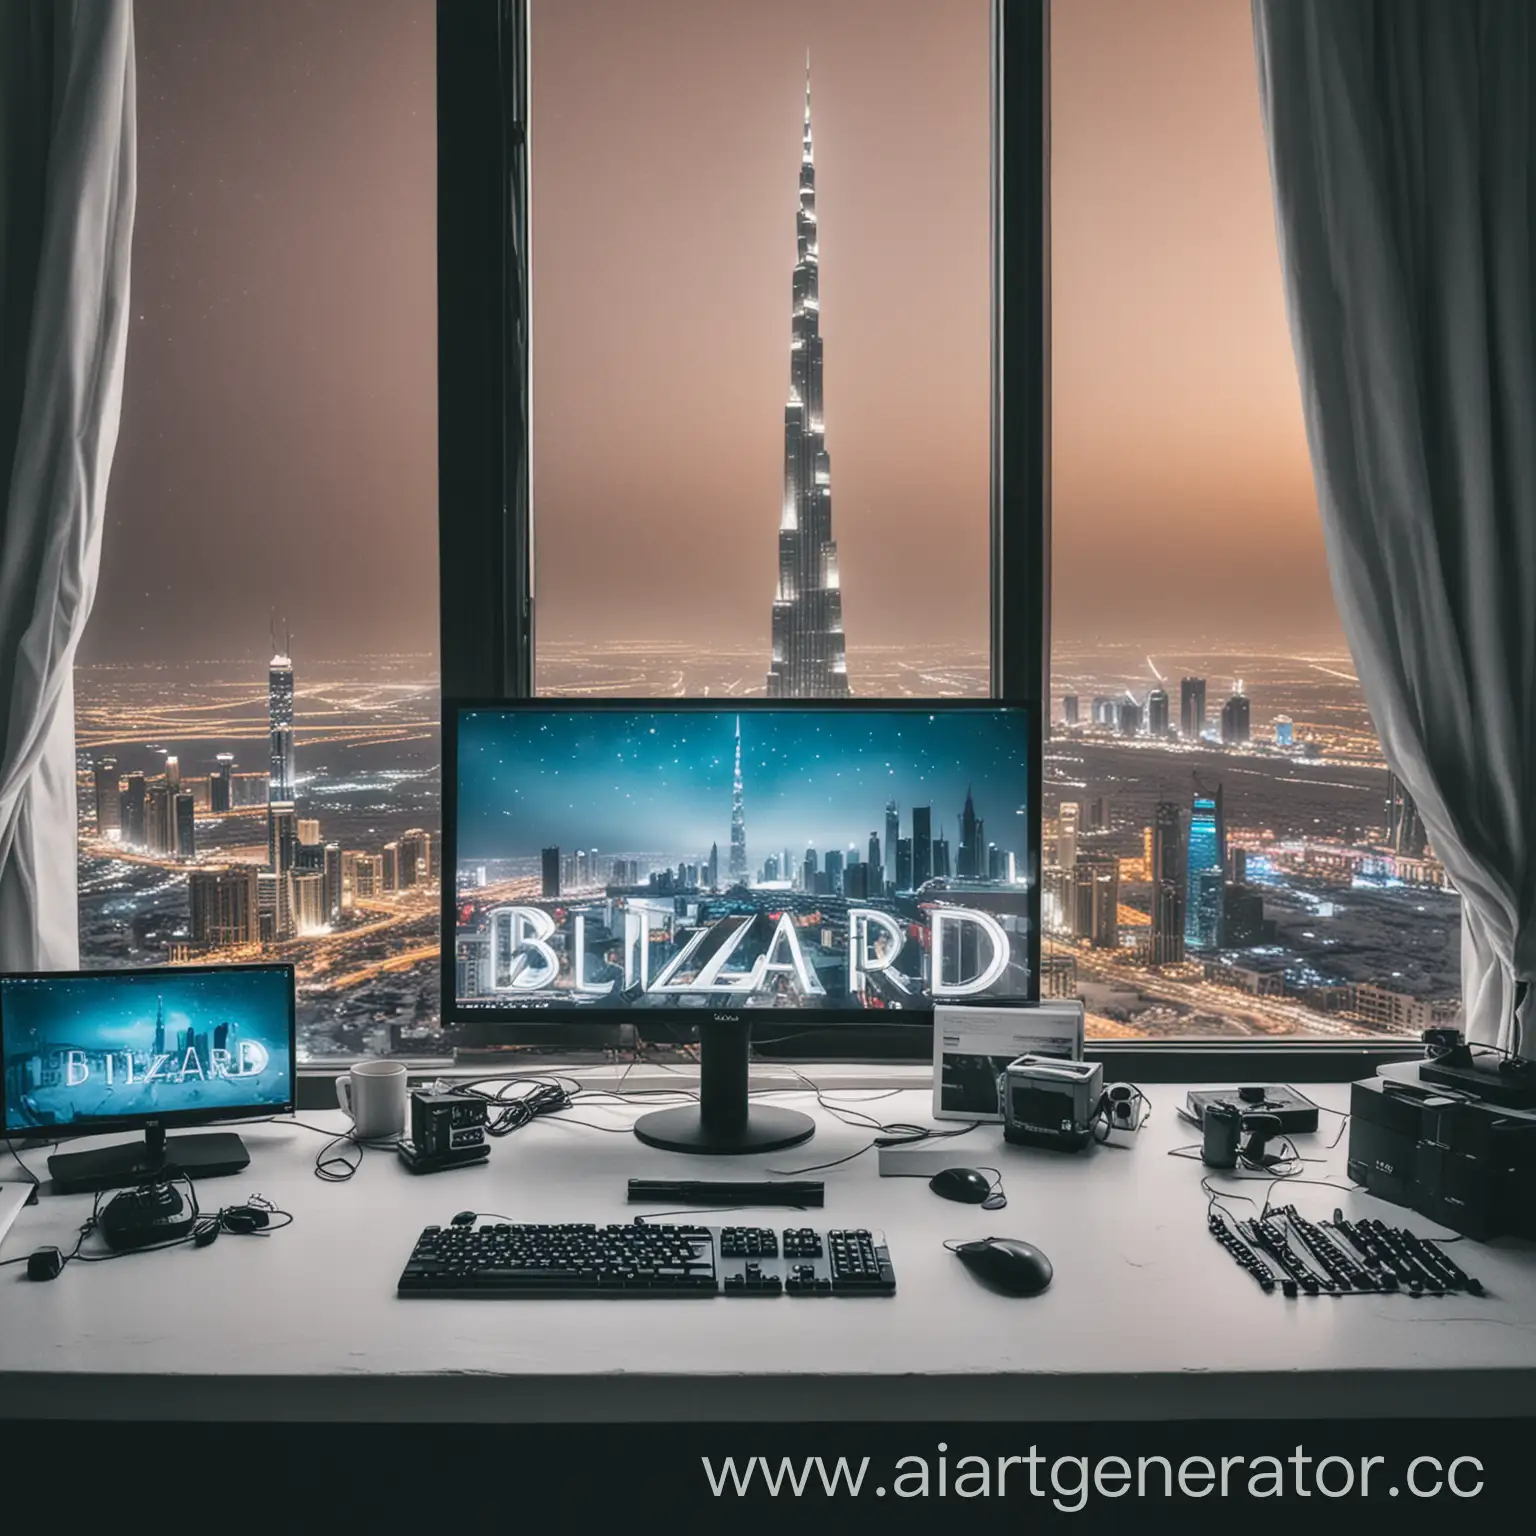 Blizzard-Sign-Illuminated-with-PC-Colors-Overlooking-Summer-Dubai-and-Burj-Khalifa